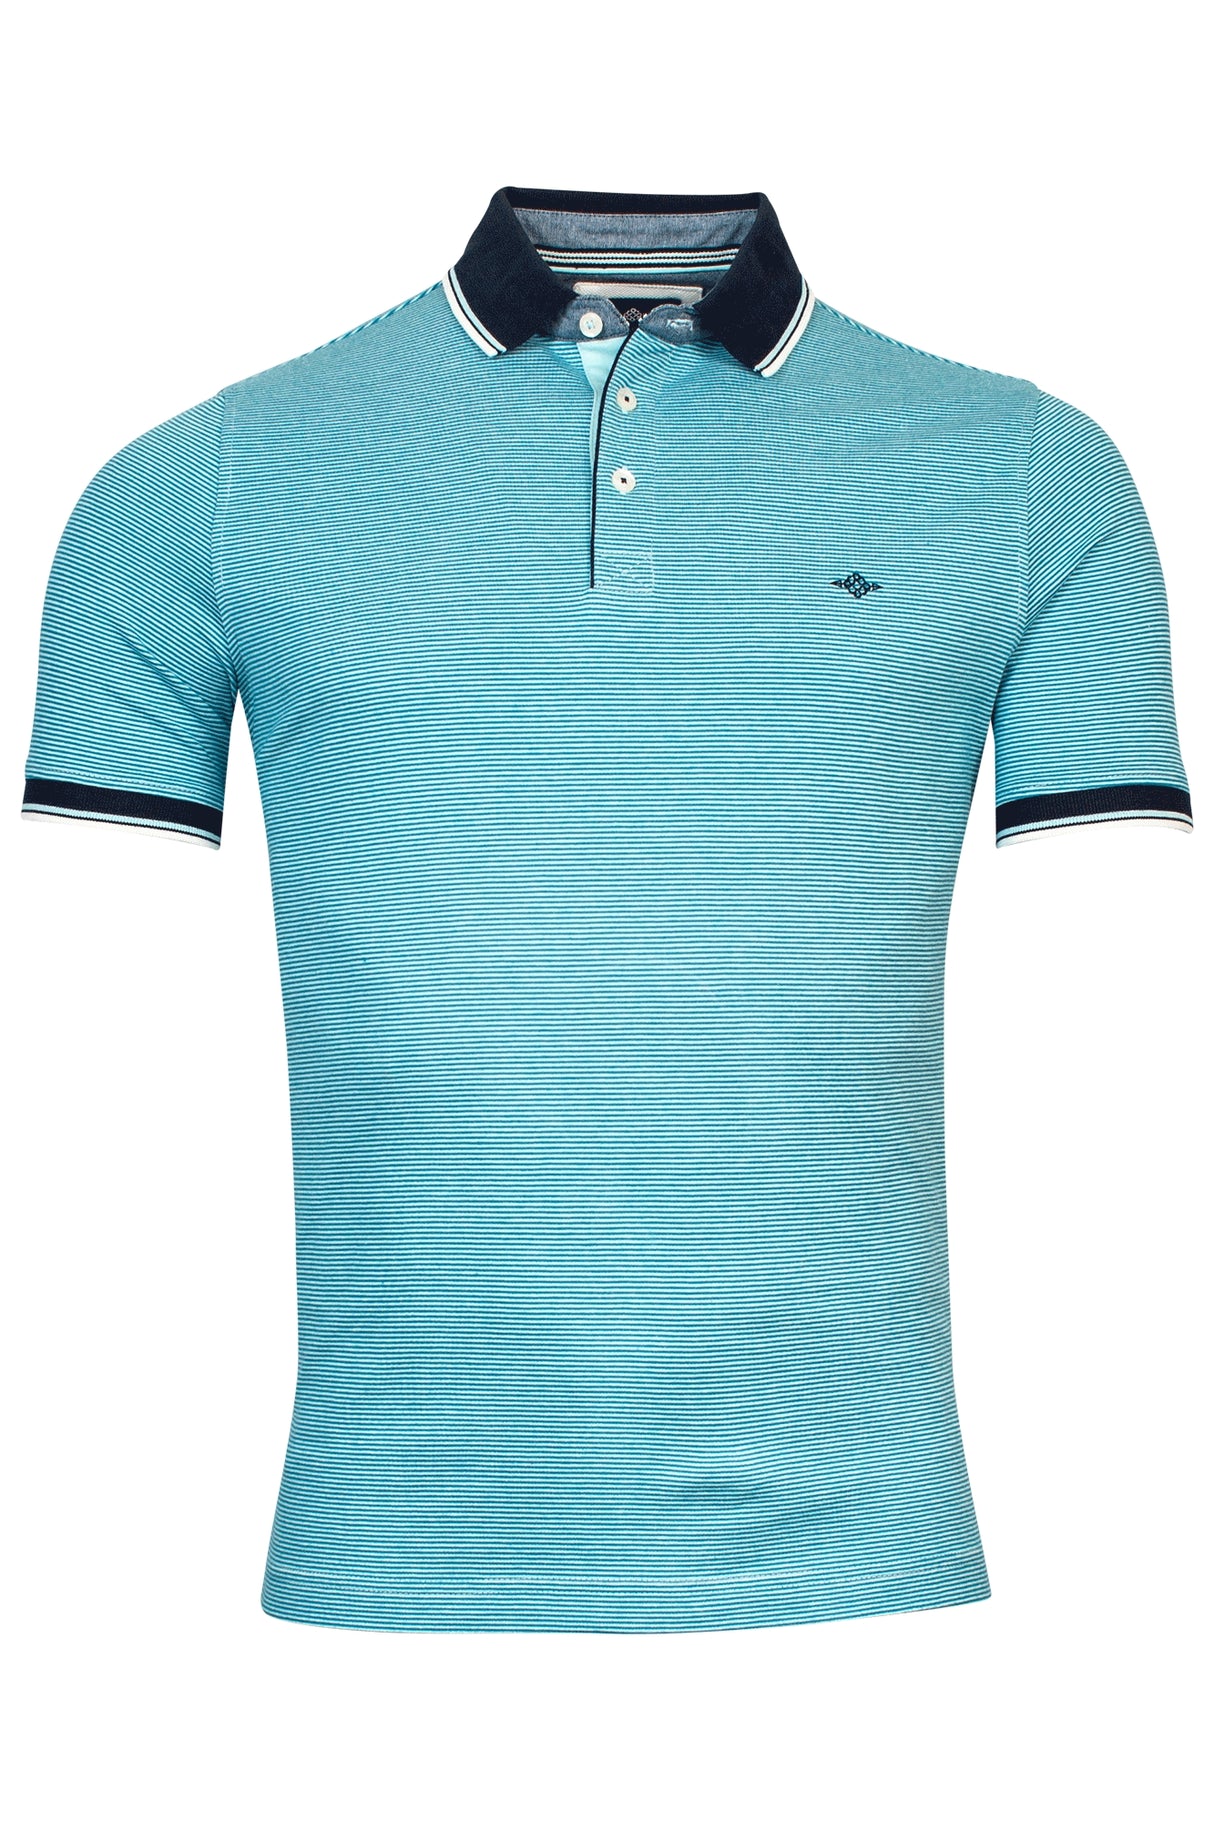 Baileys Jersey Aqua Polo Shirt Blue